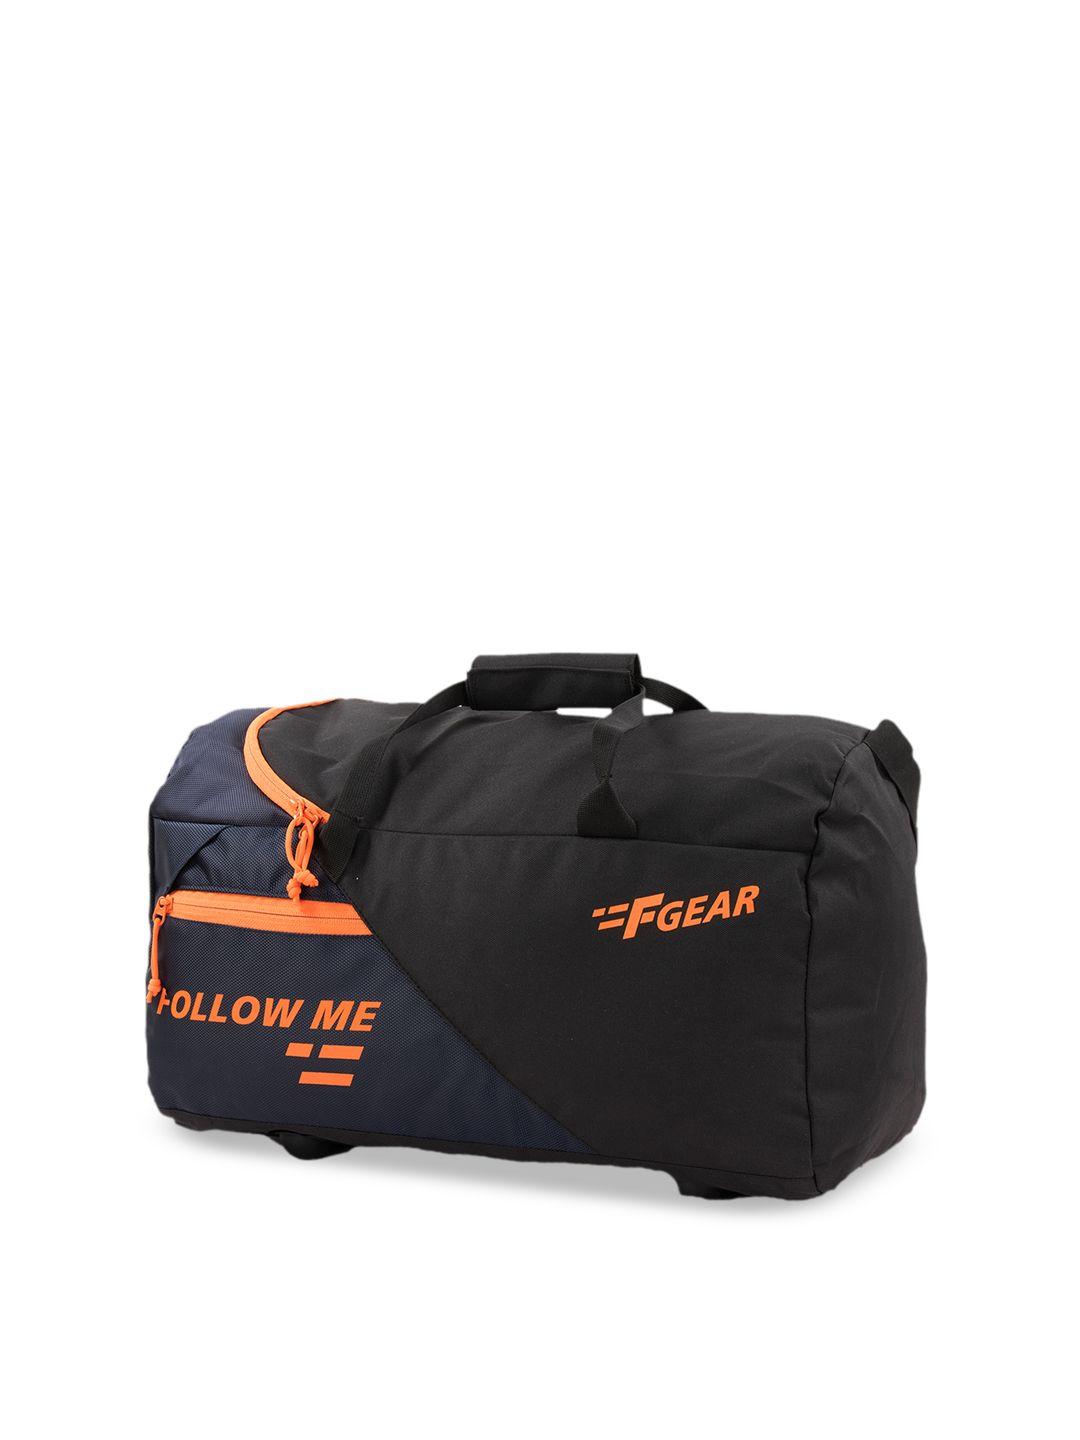 f gear unisex black & navy blue colourblocked gym duffel bag with printed detail